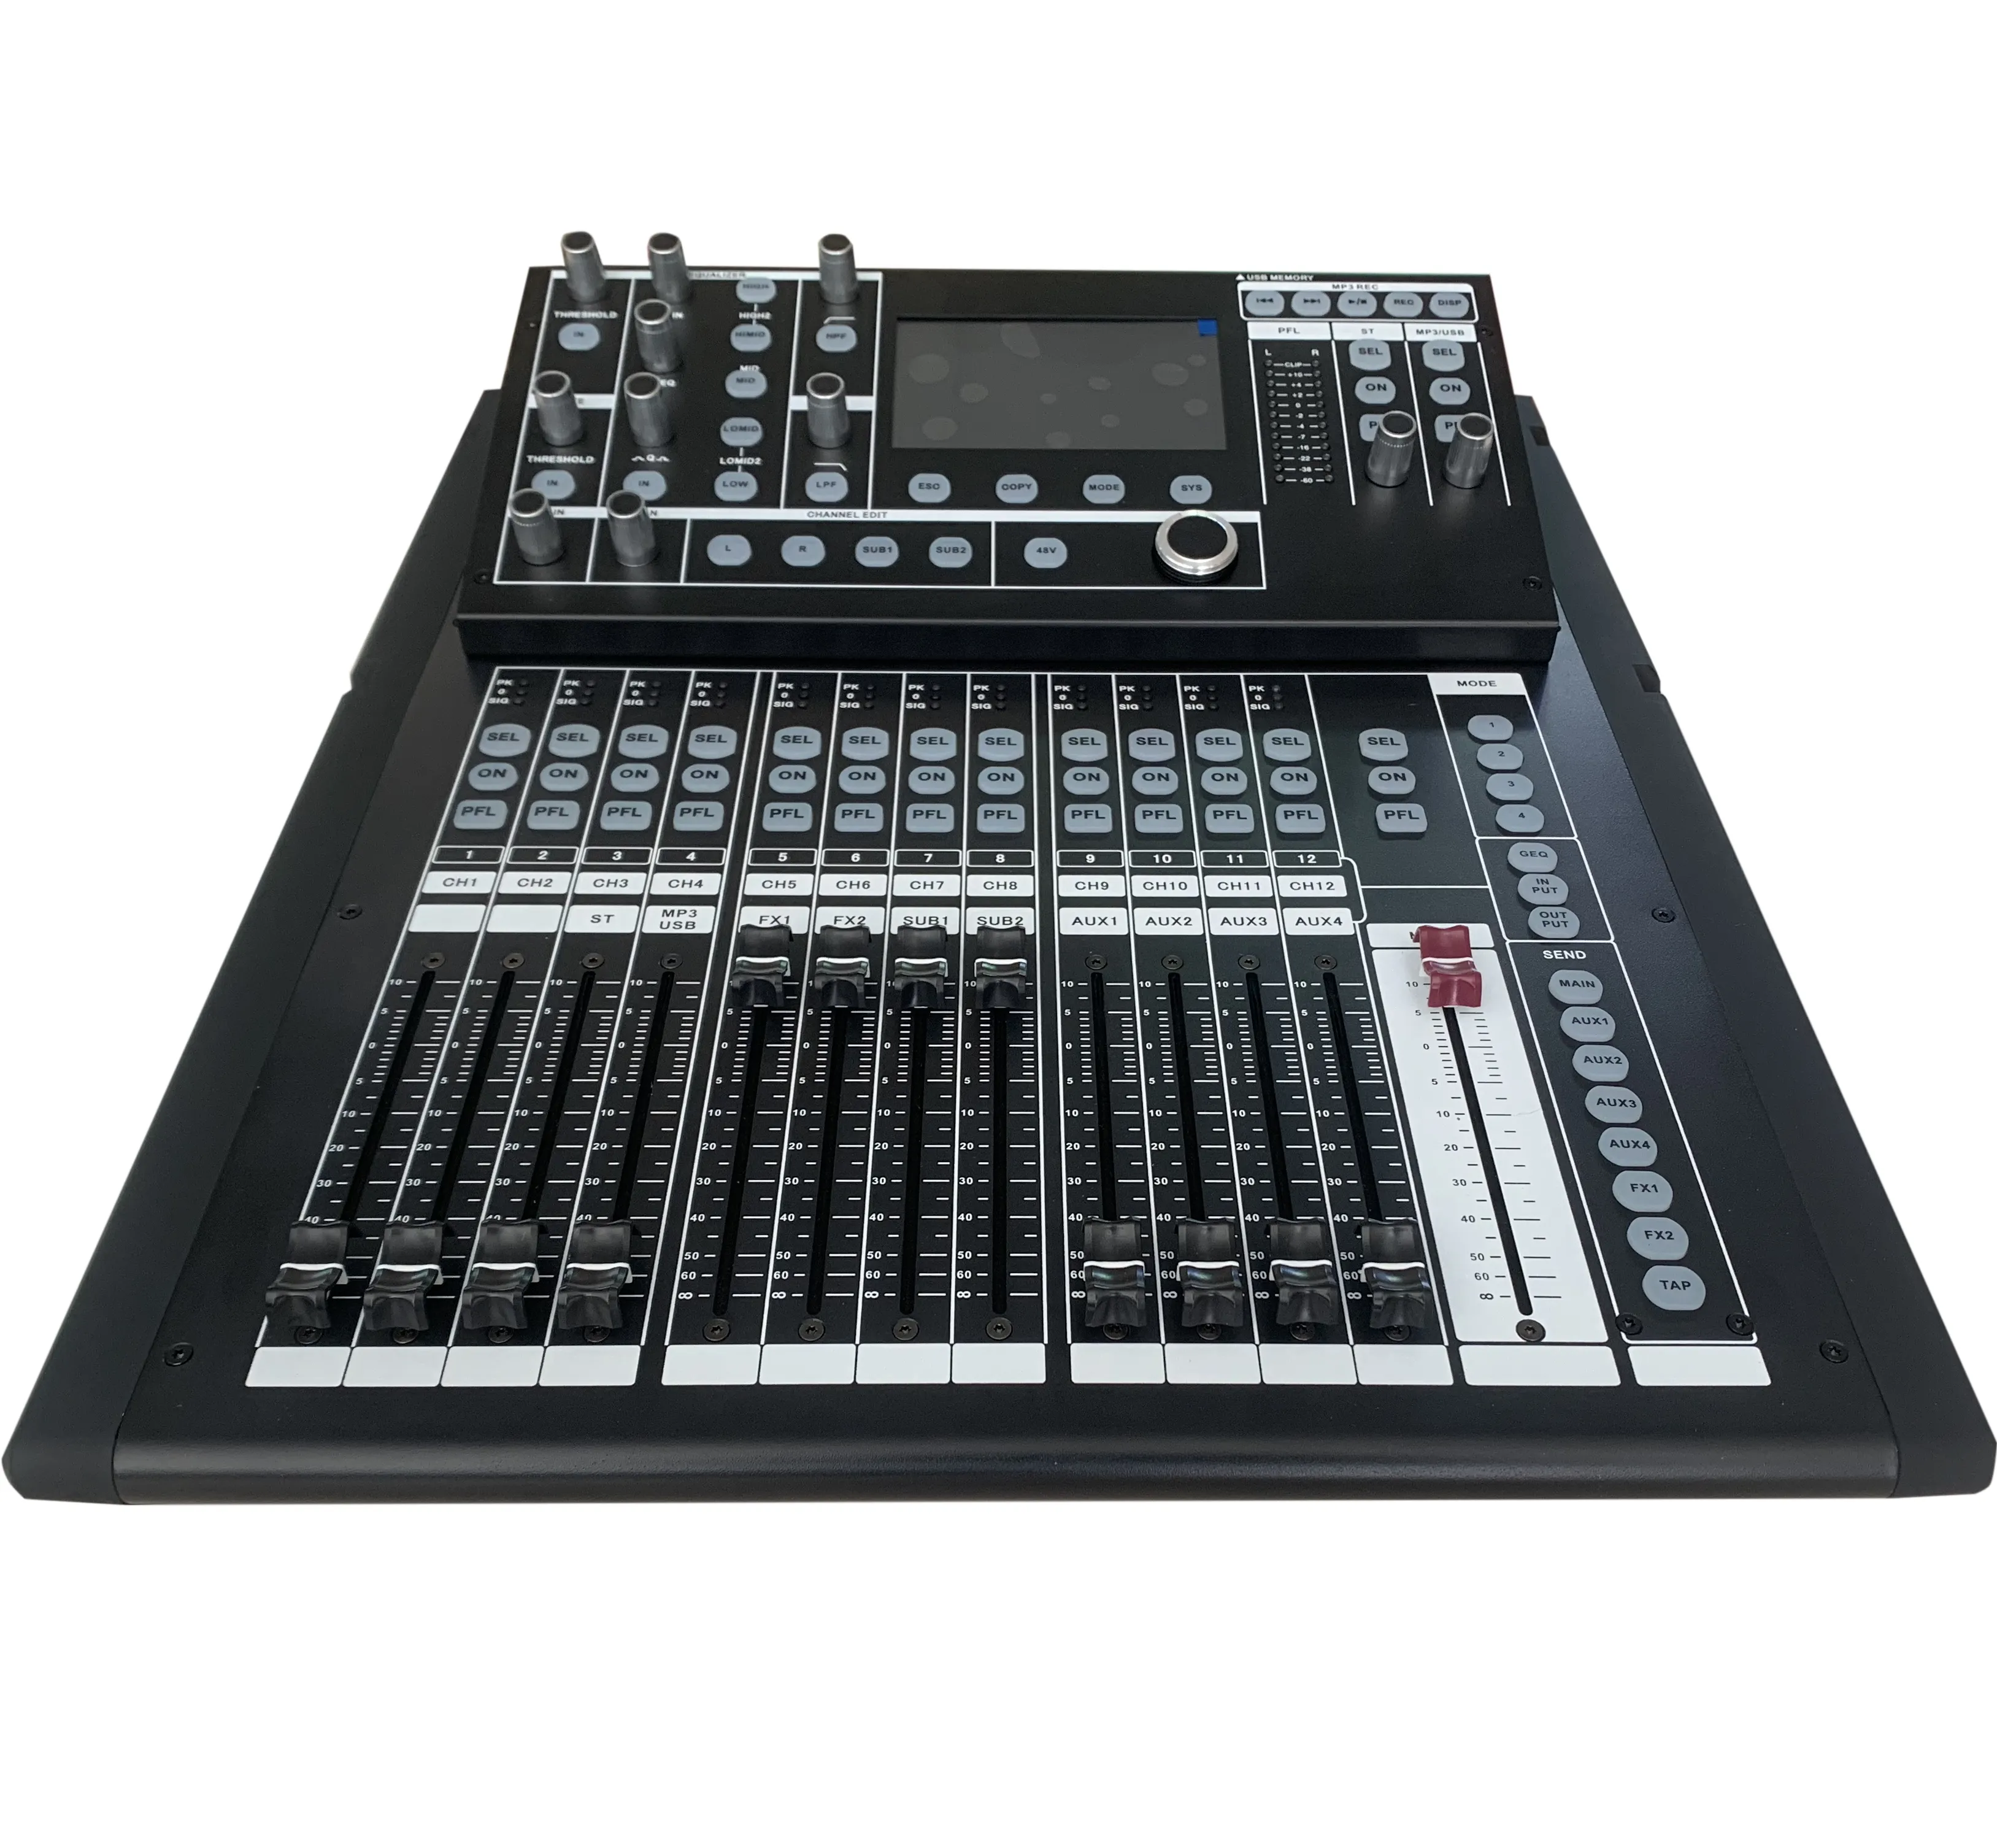 TX-16 digital mixer console audio motoris Fader professional audio speaker mixer DJ sound system DSP effects